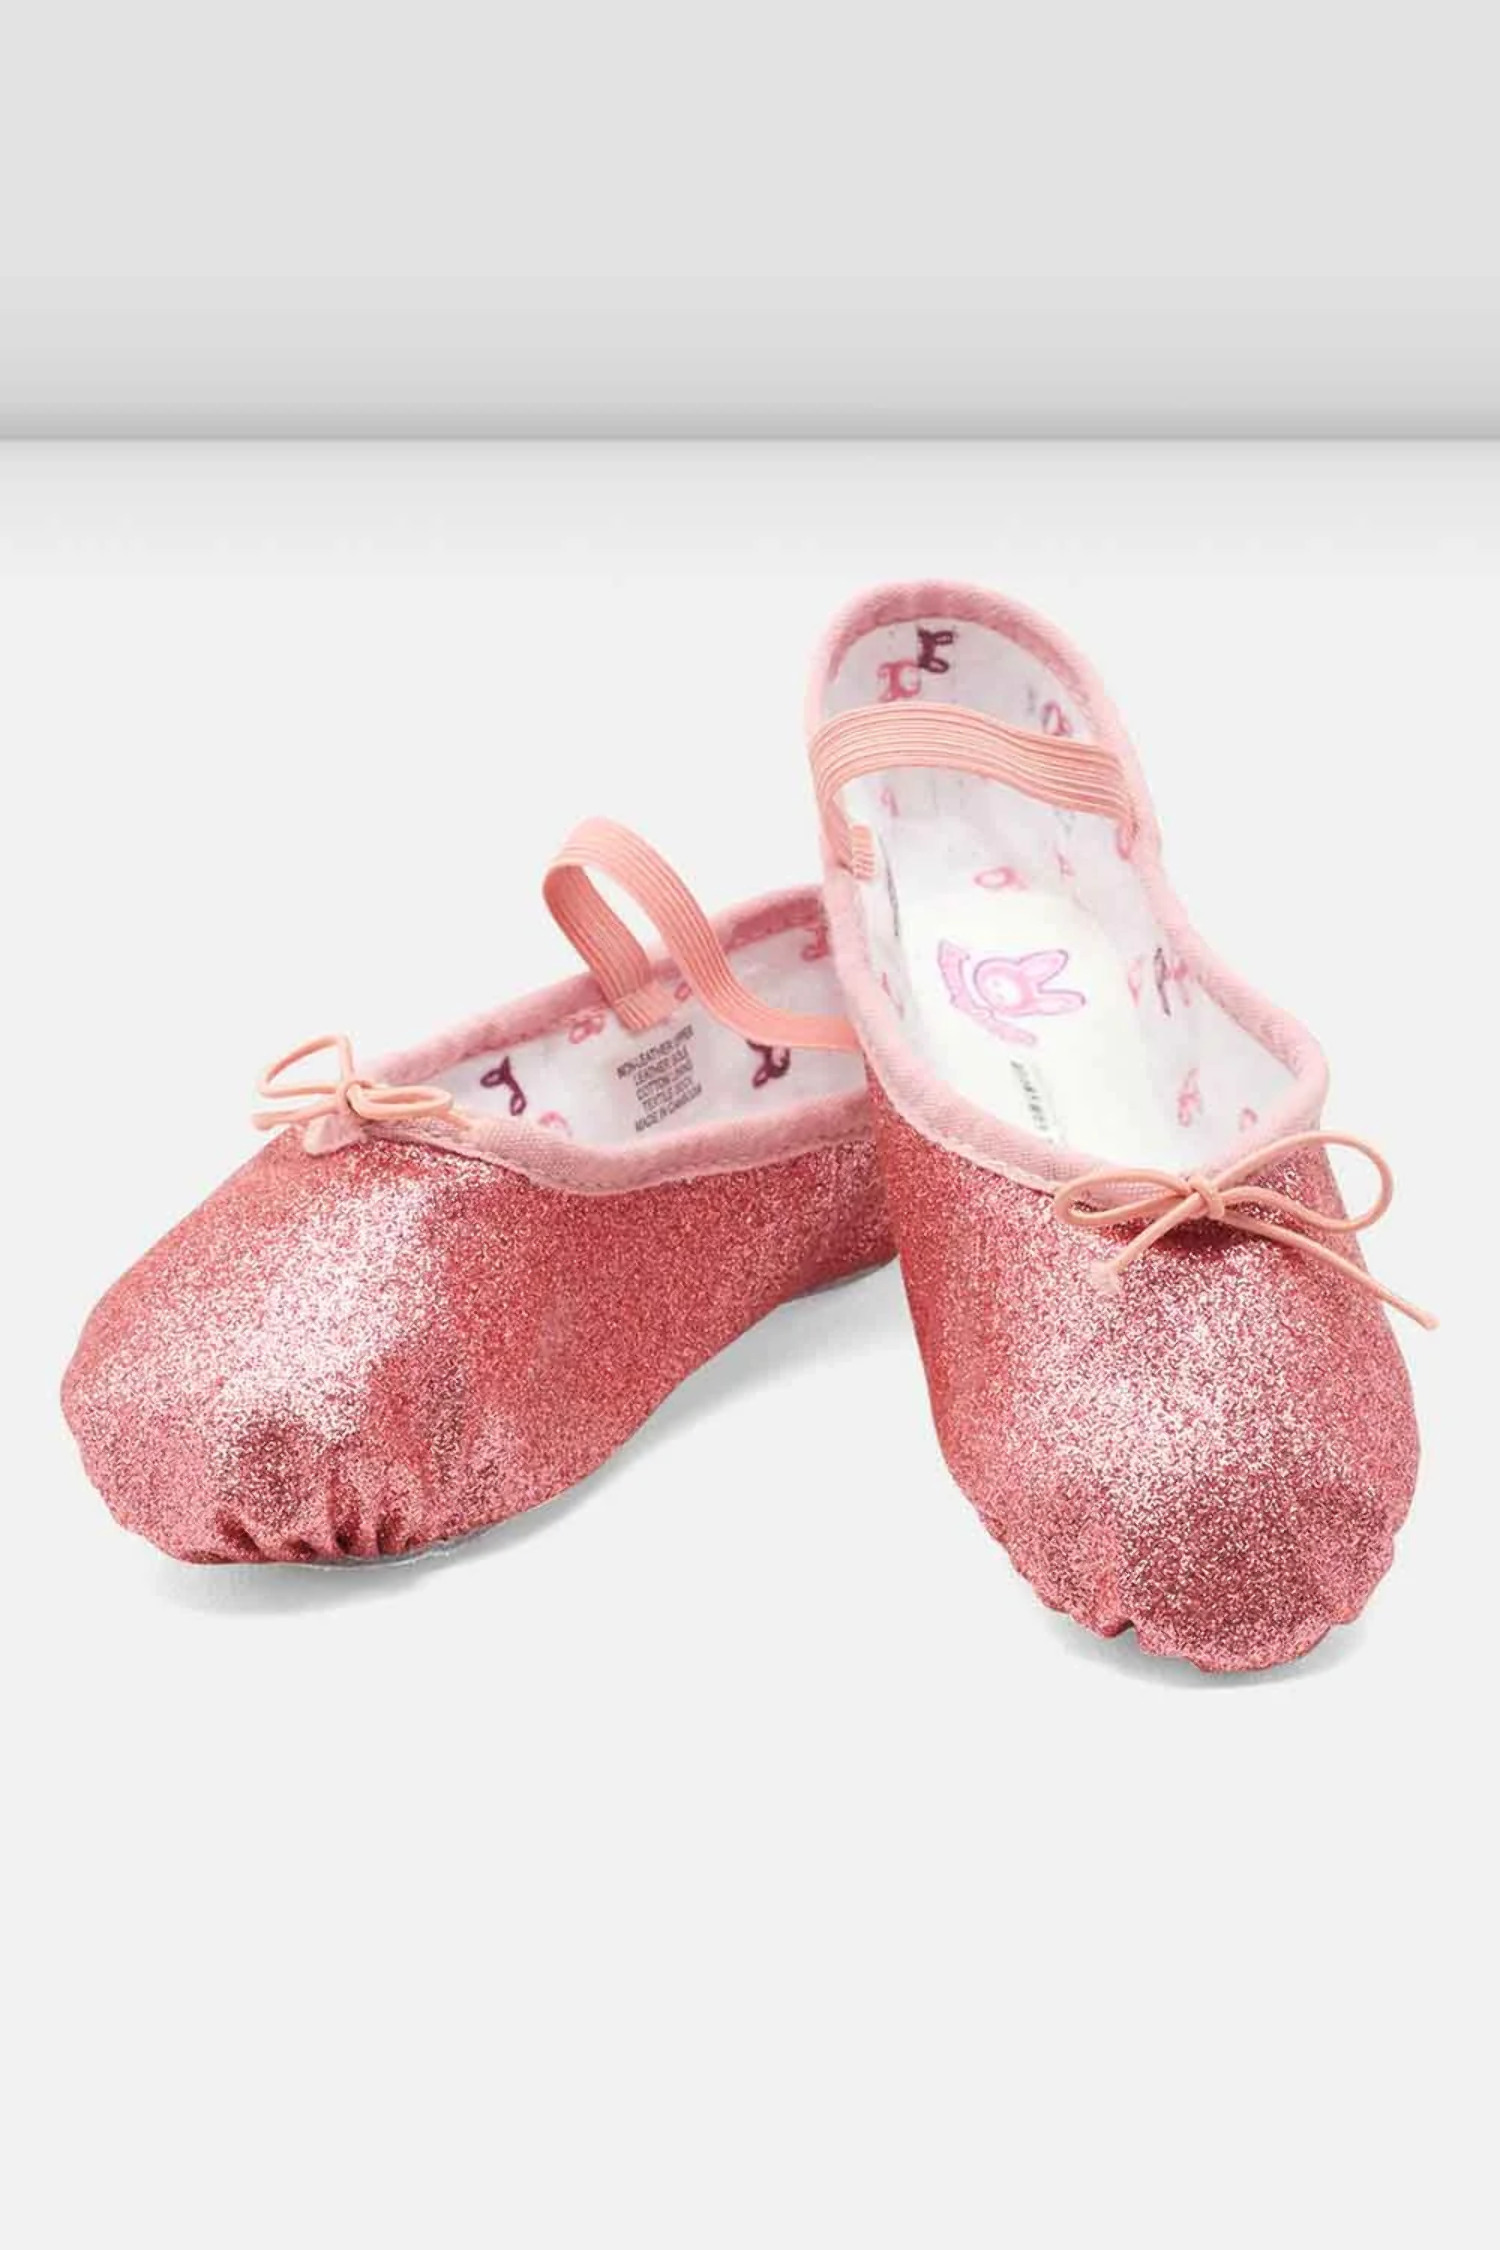 BLOCH Childrens Glitterdust Ballet Shoes, Rose - image 1 of 9